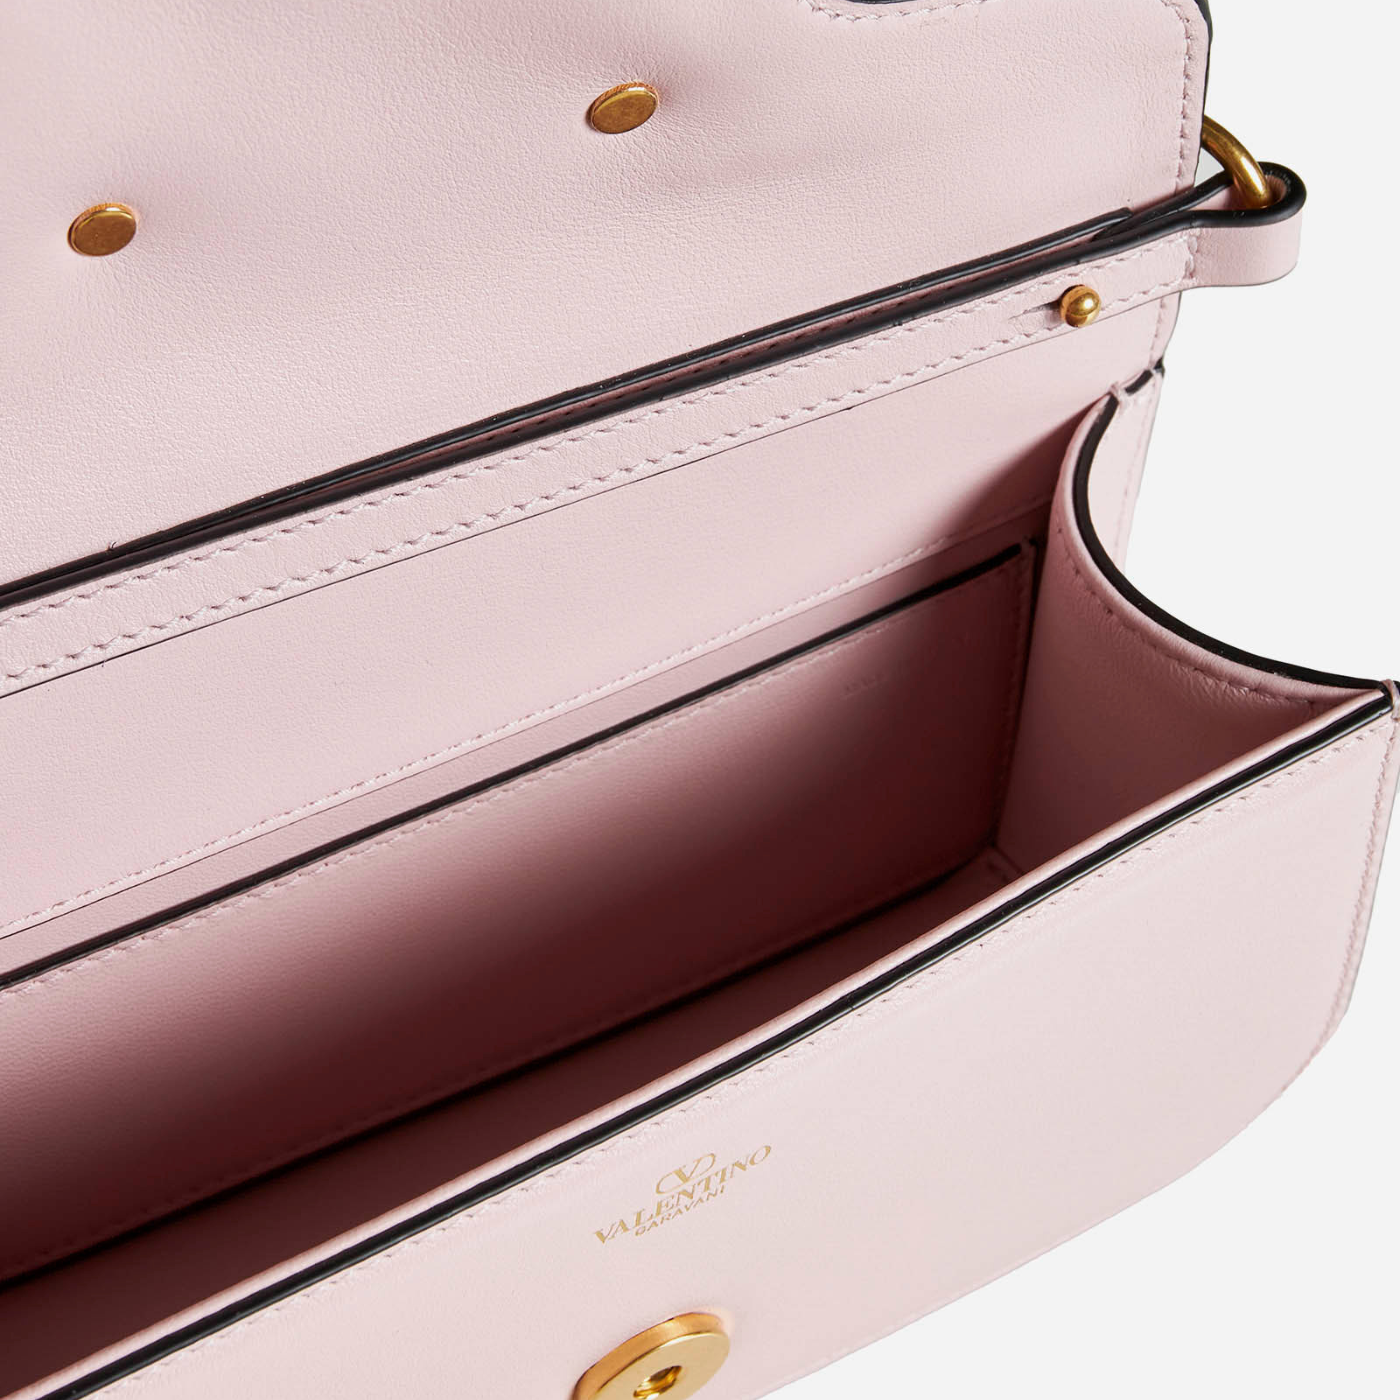 Locò Small Shoulder Bag in Powder Rose Handbags VALENTINO - LOLAMIR